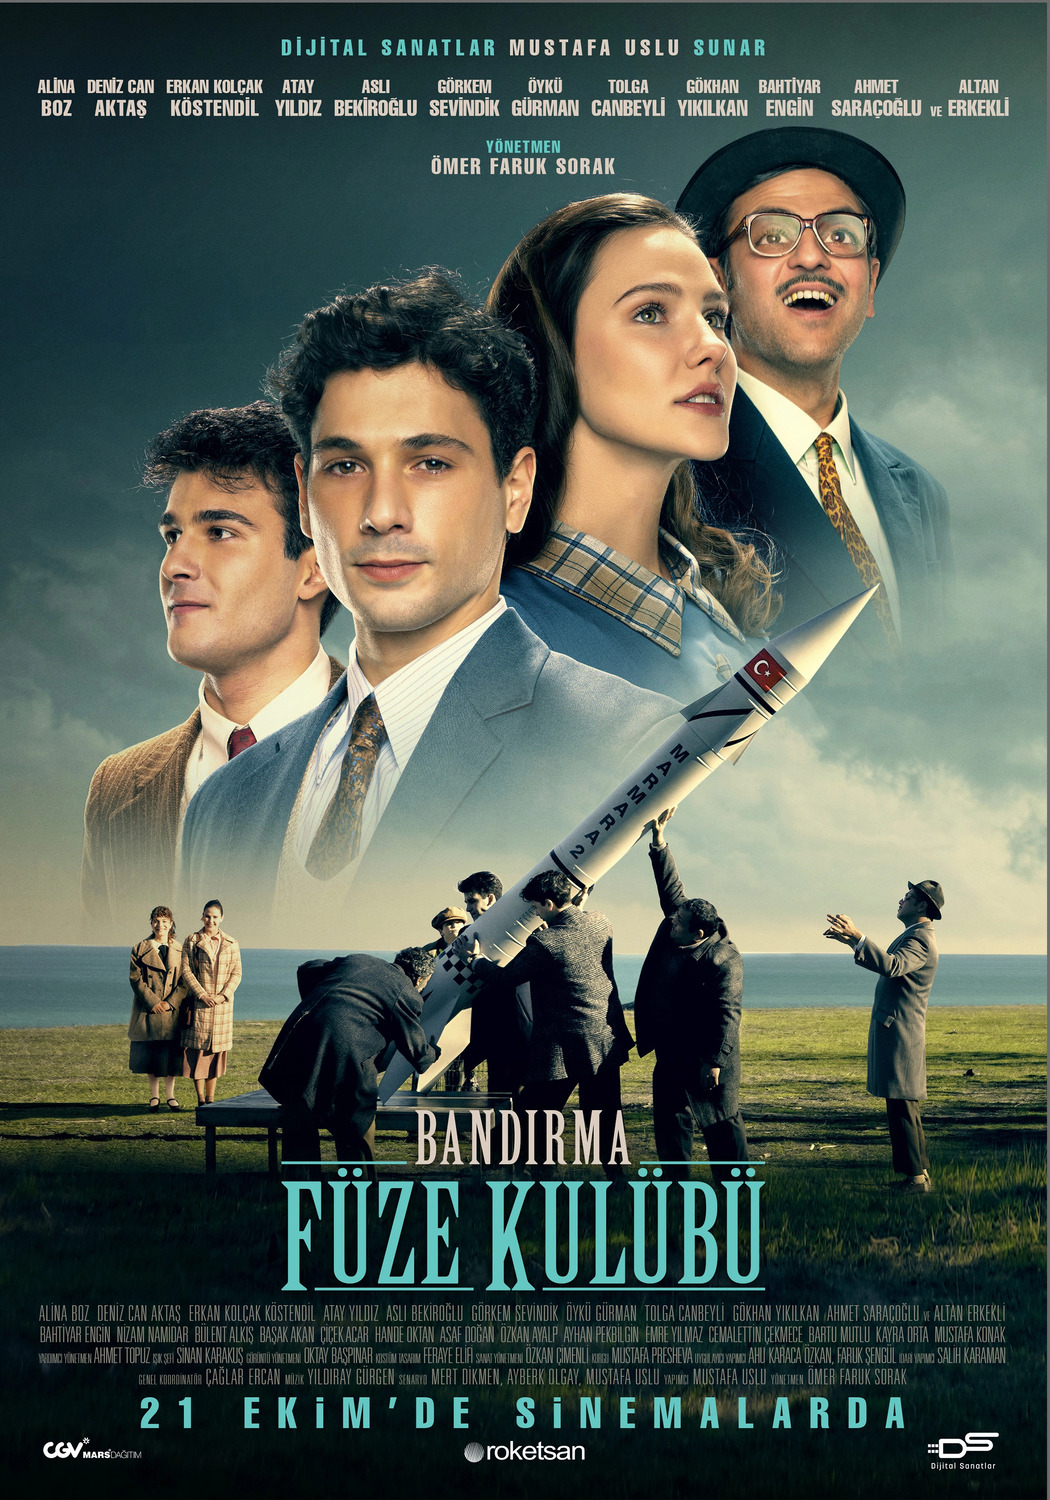 Extra Large Movie Poster Image for Bandirma Füze Kulübü 